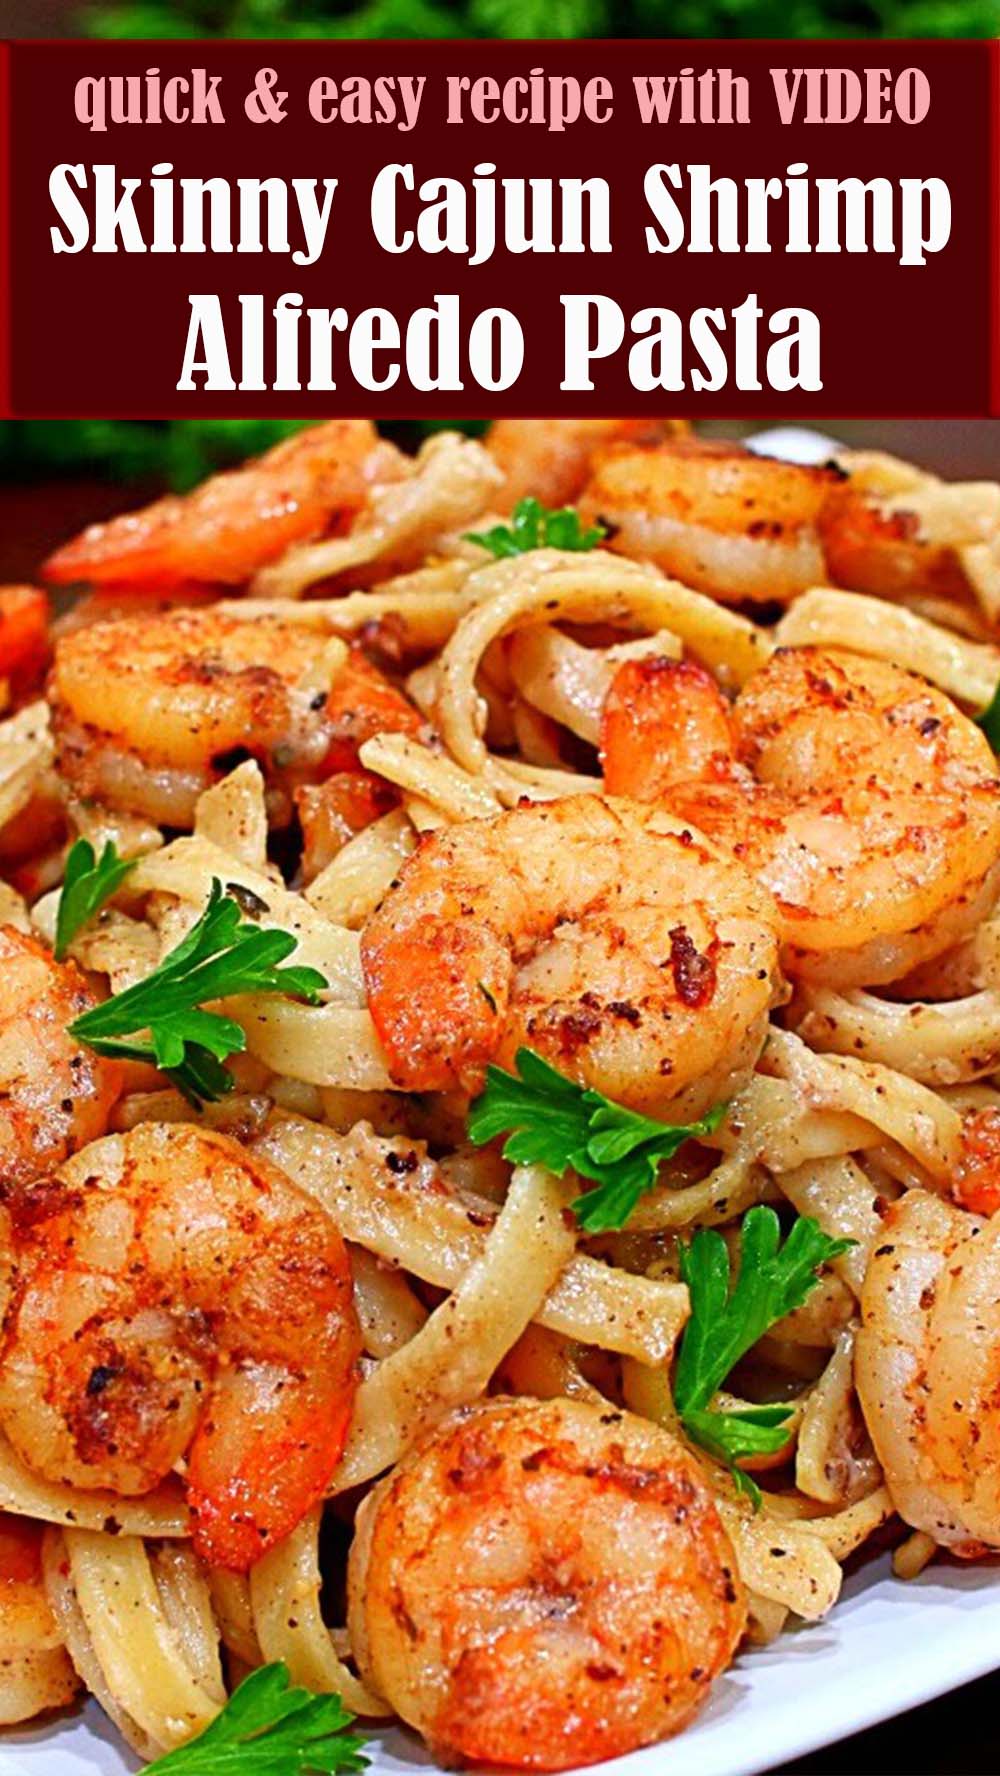 Skinny Cajun Shrimp Alfredo Pasta Recipe